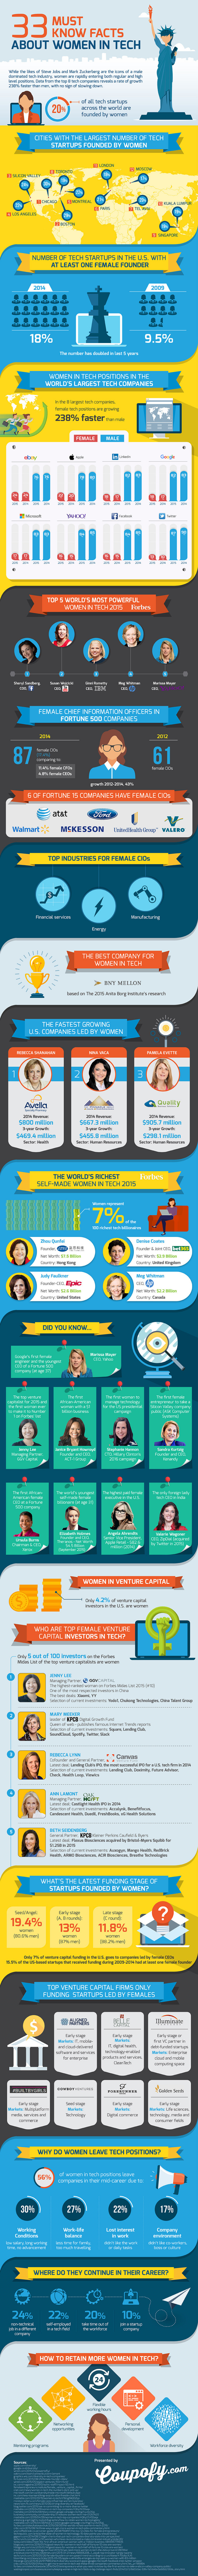 Women-in-Tech_Infographic_updated_Nov15